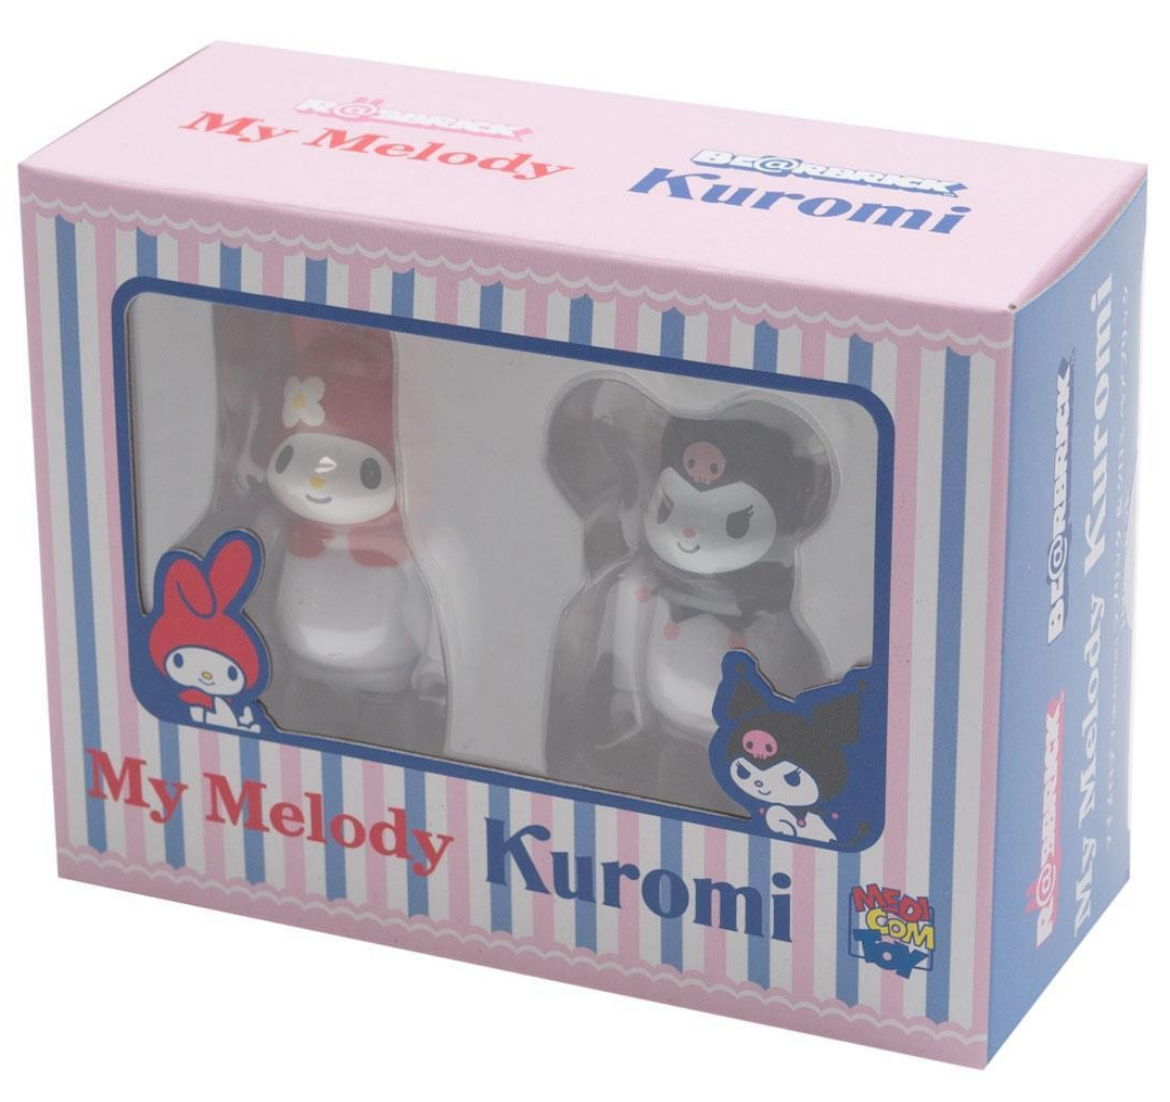 My melody & Kuromi bear brick box